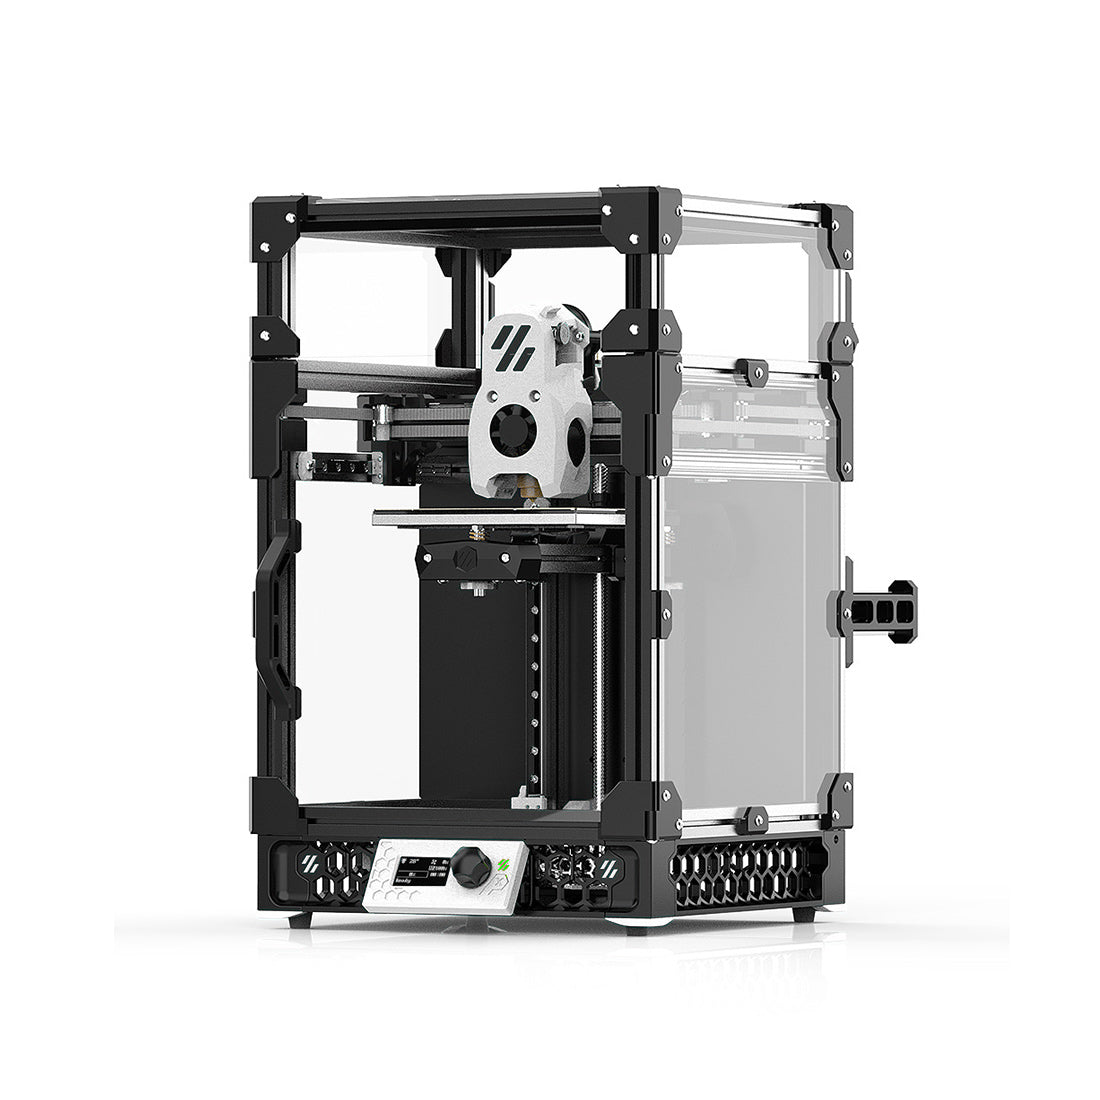 Voron 0.2 R1 3D Printer Kit Build your own DIY 3D Printer